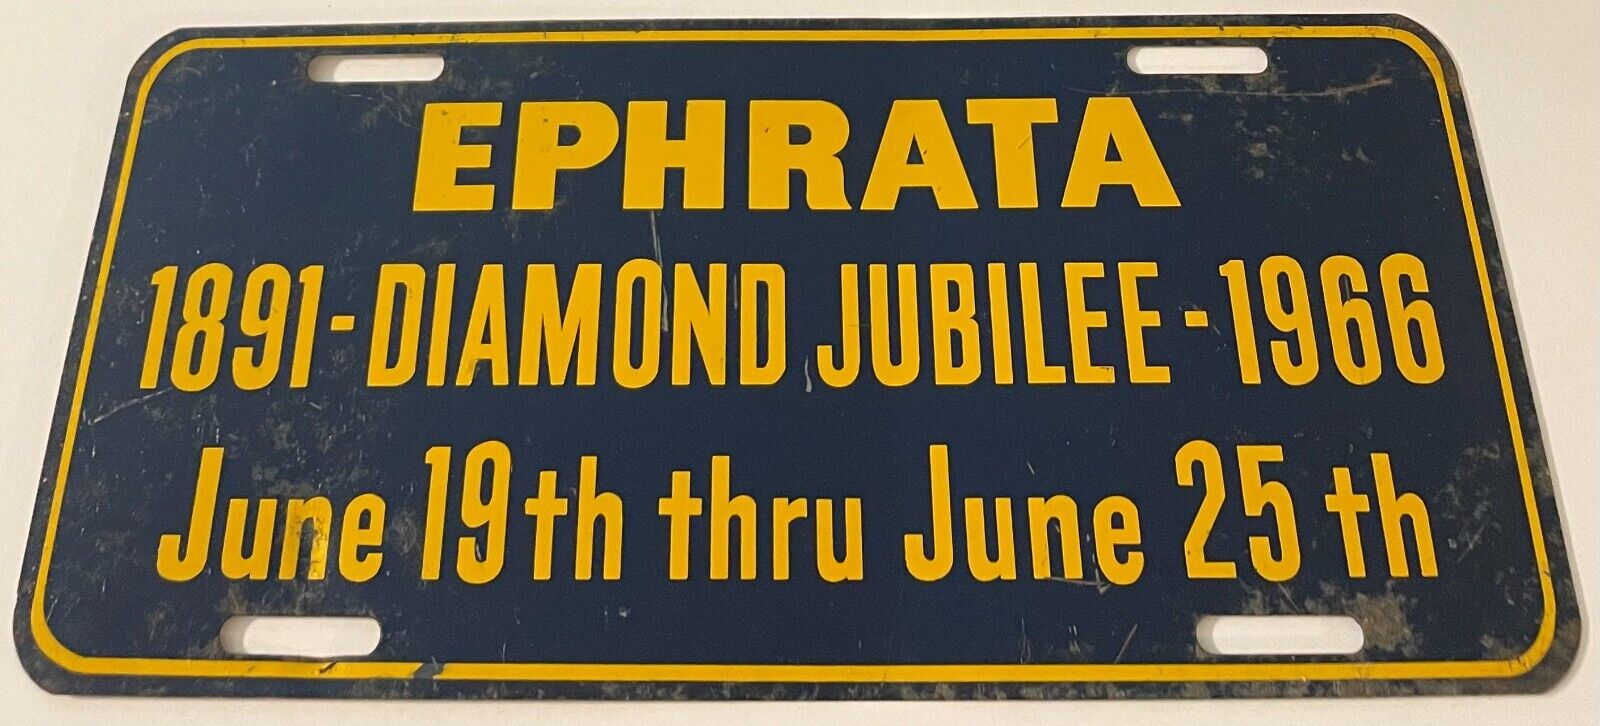 1891 1966 Ephrata Diamond Jubilee Booster License Plate STEEL